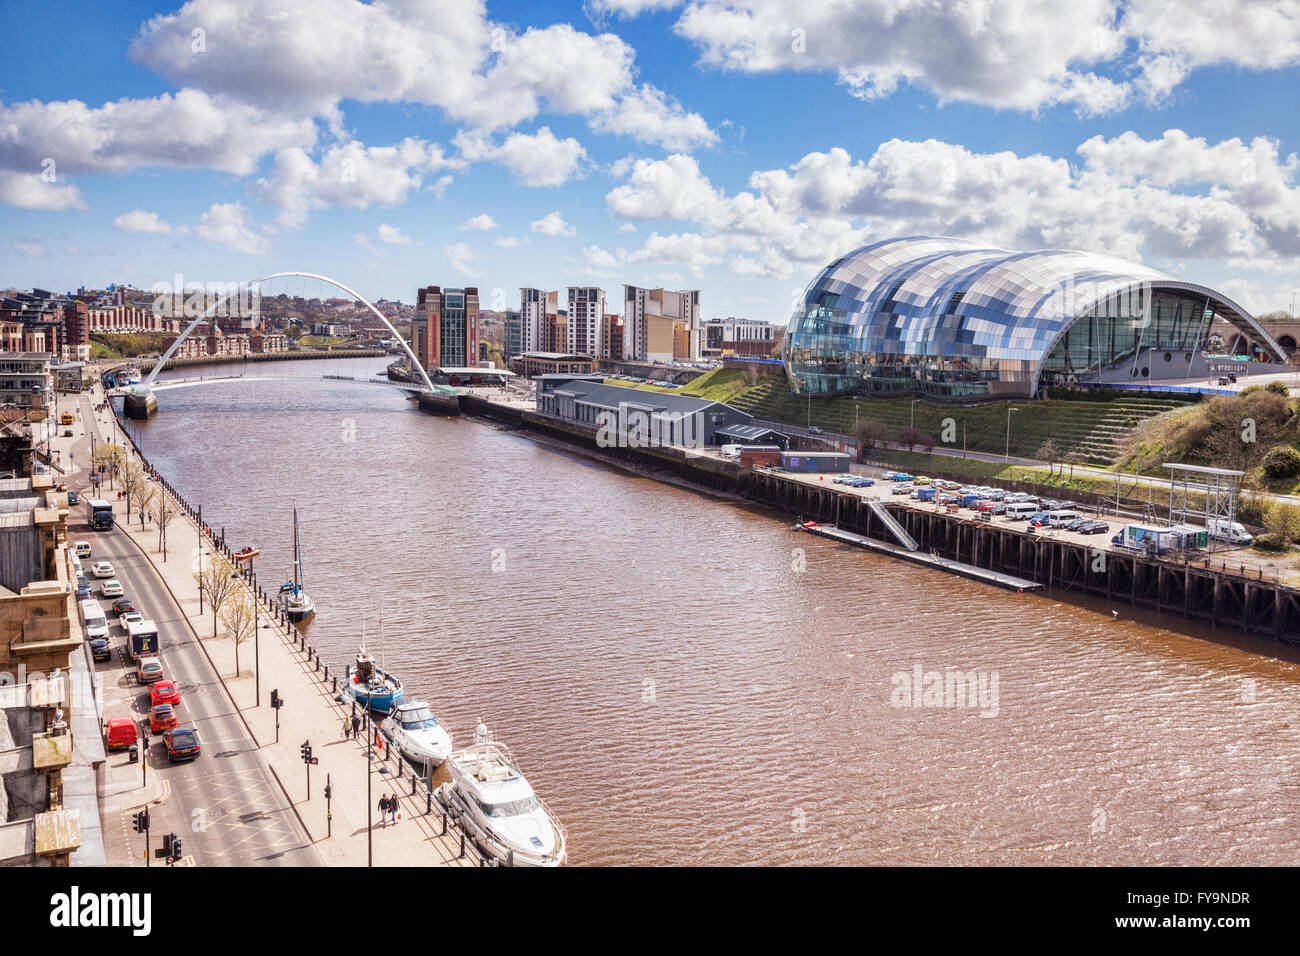 The River Tyne, the Gateshead Millennium Bridge,  the Gateshead Sage, and HMS Calliope, Tyne and Wear, England, UK Stock Photo